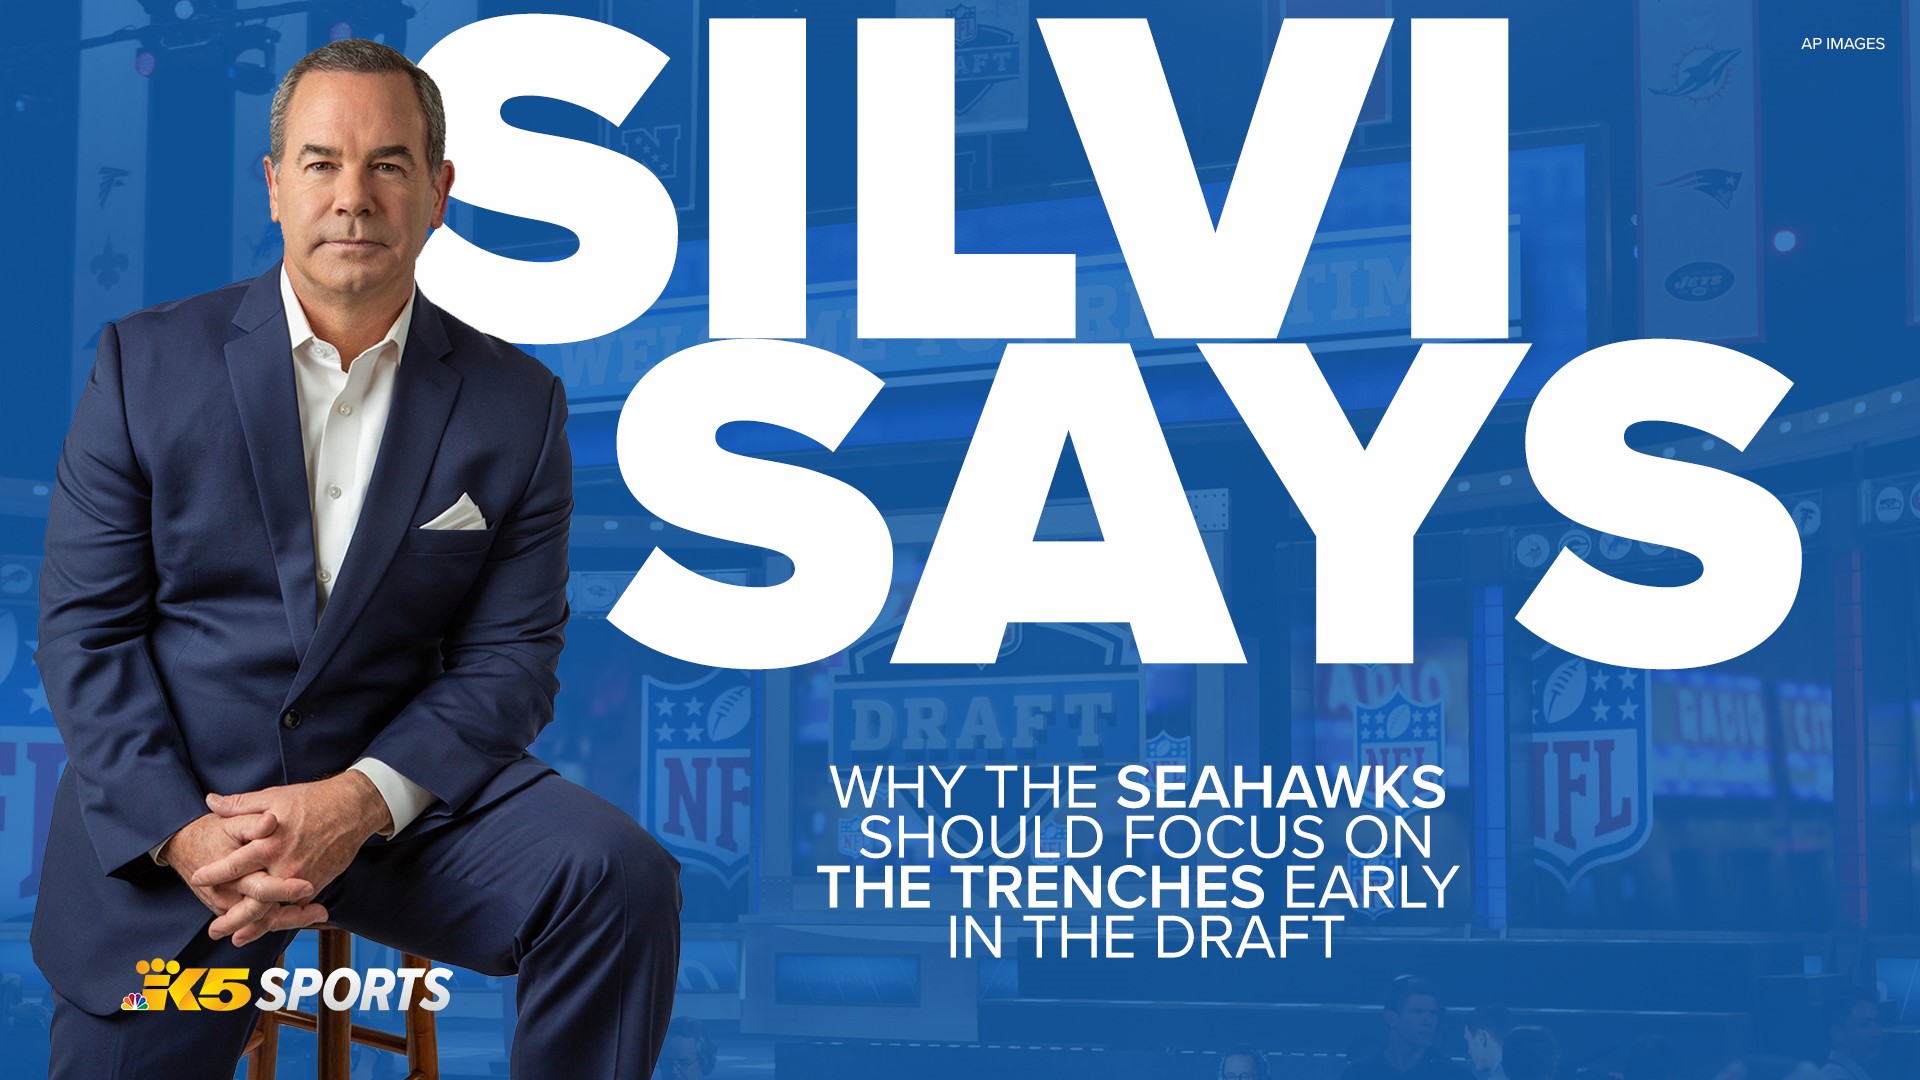 Paul Silvi breaks down how the Seahawks should approach this week's NFL Draft.